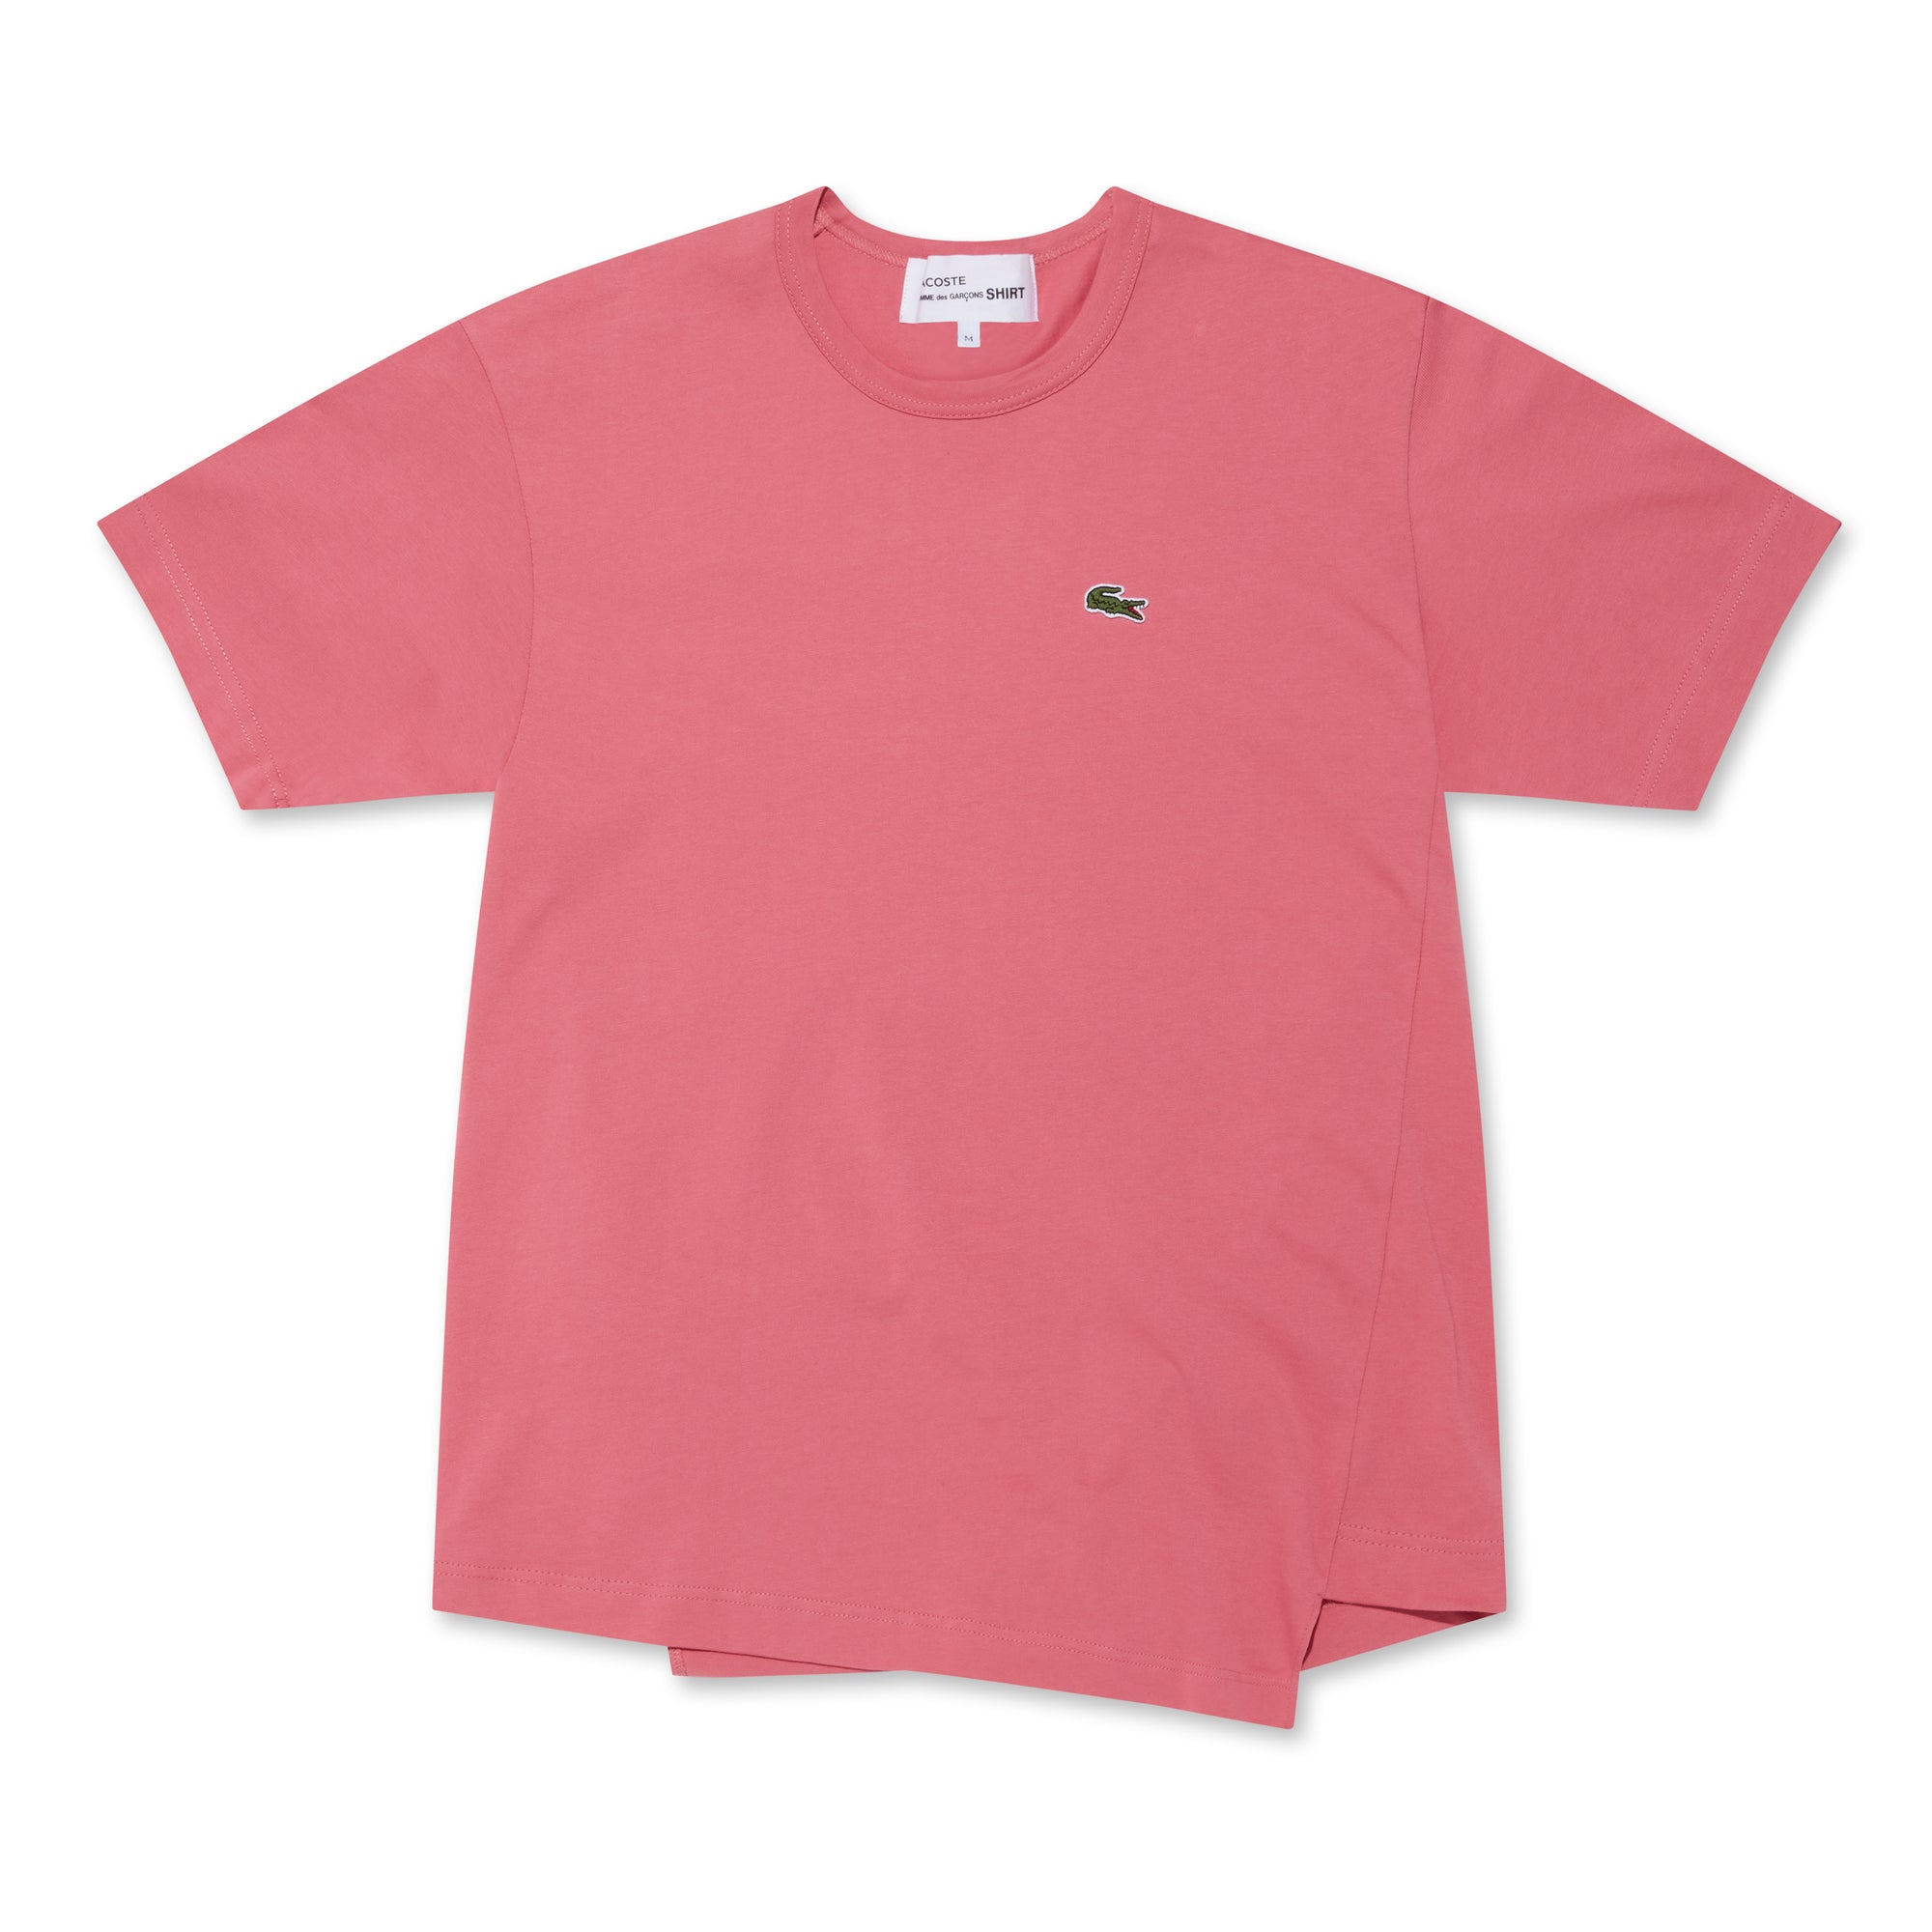 CDG Shirt - Lacoste Men’s T-Shirt - (Pink) view 5